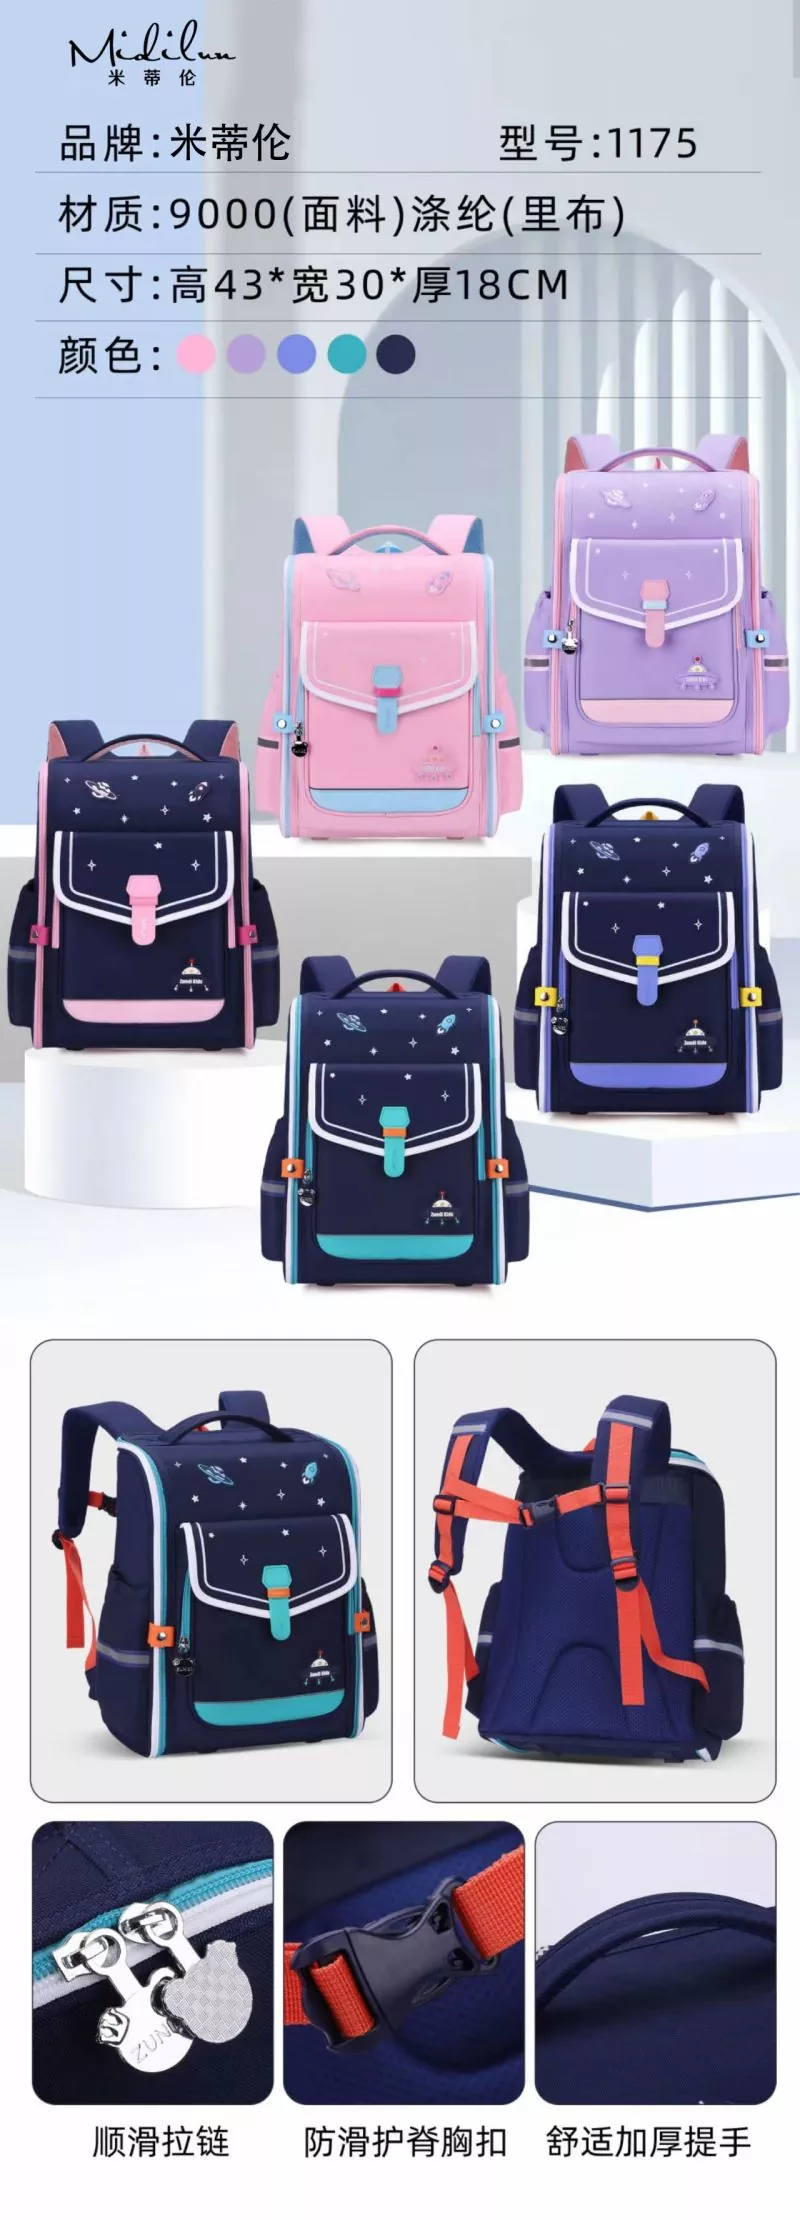 School Bag for Elementary School Students